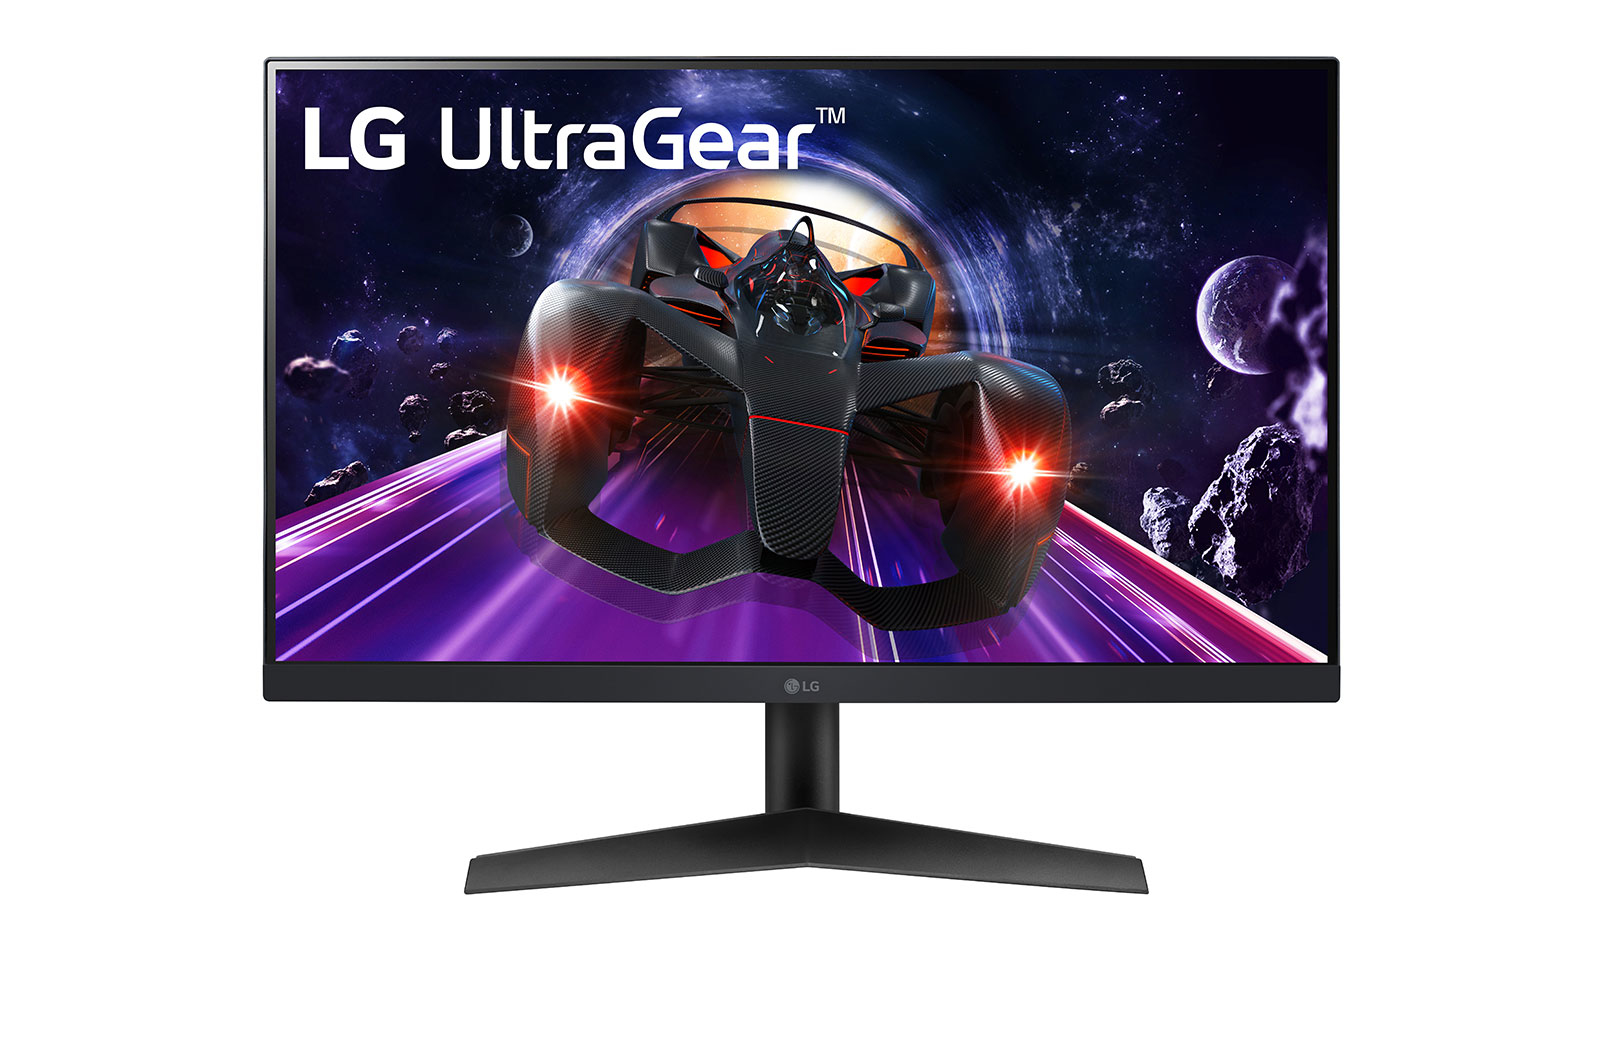 LG 24GN60R-B computer monitor